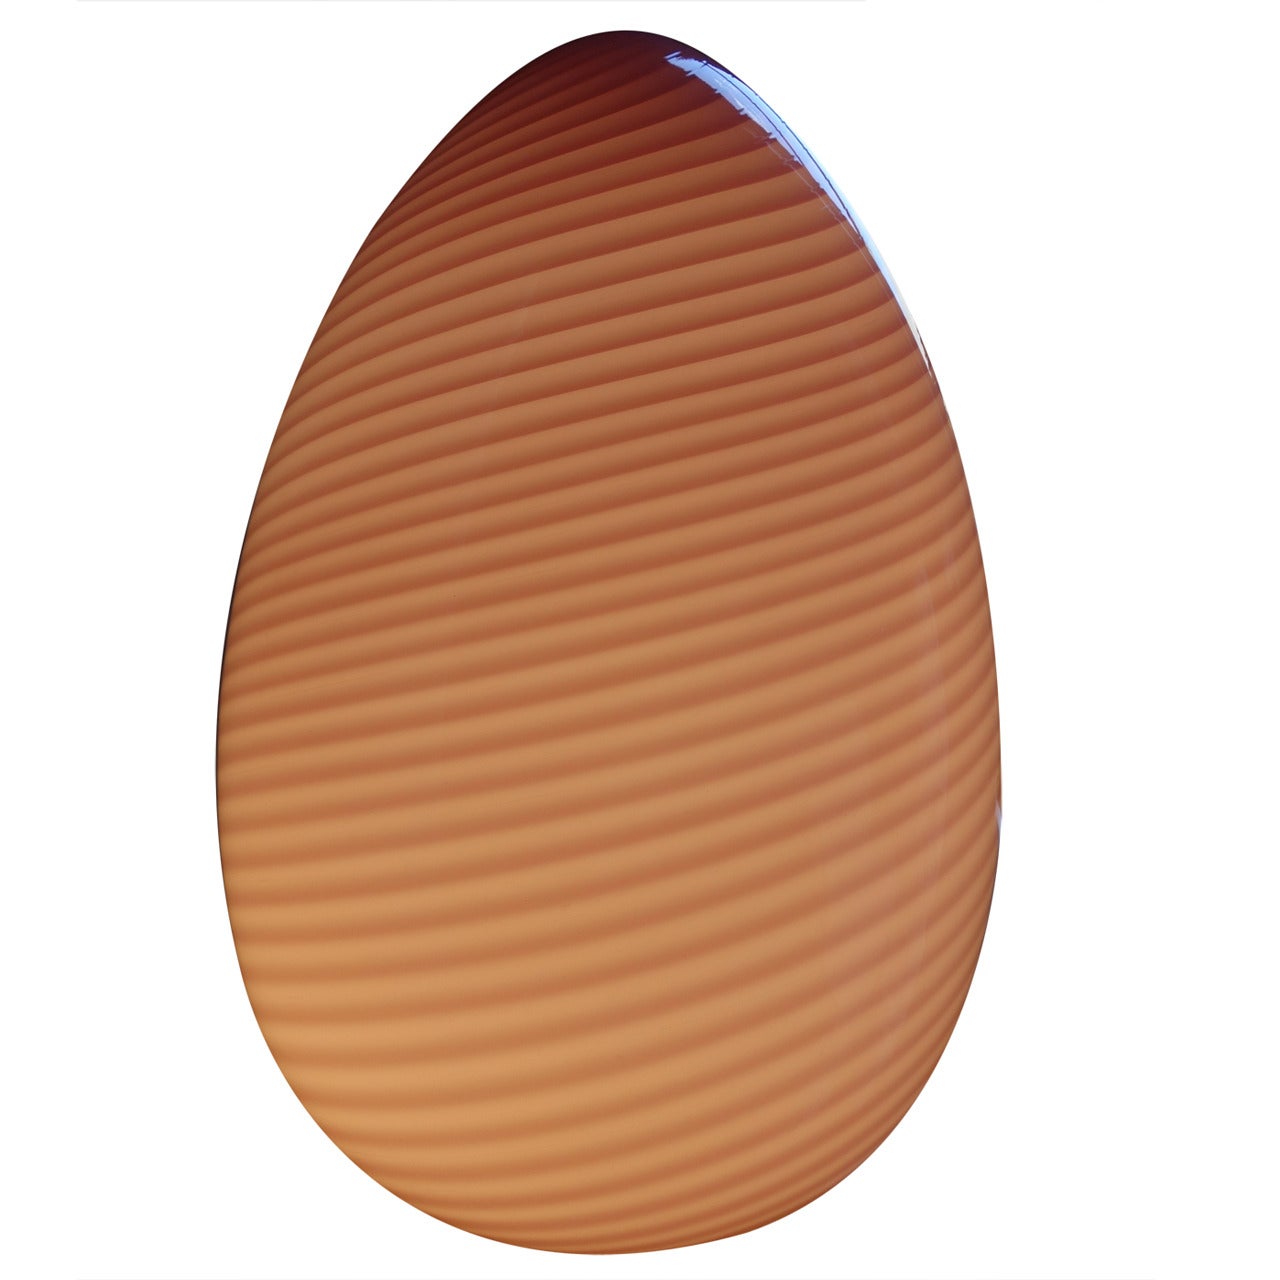 Giant Murano Glass Egg Lamp For Sale